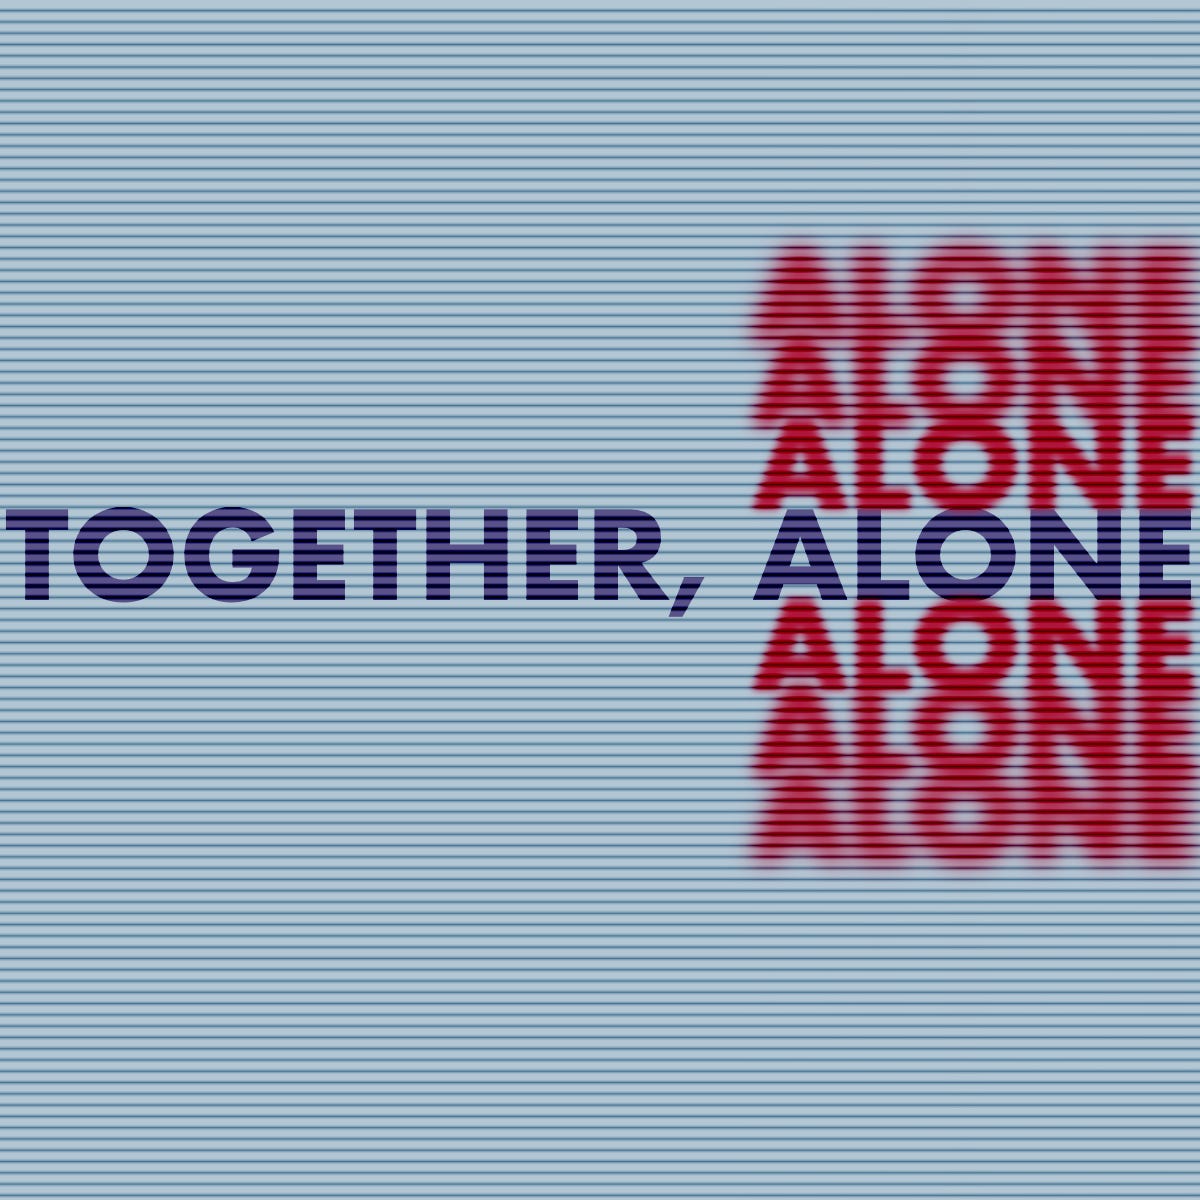 Together, Alone